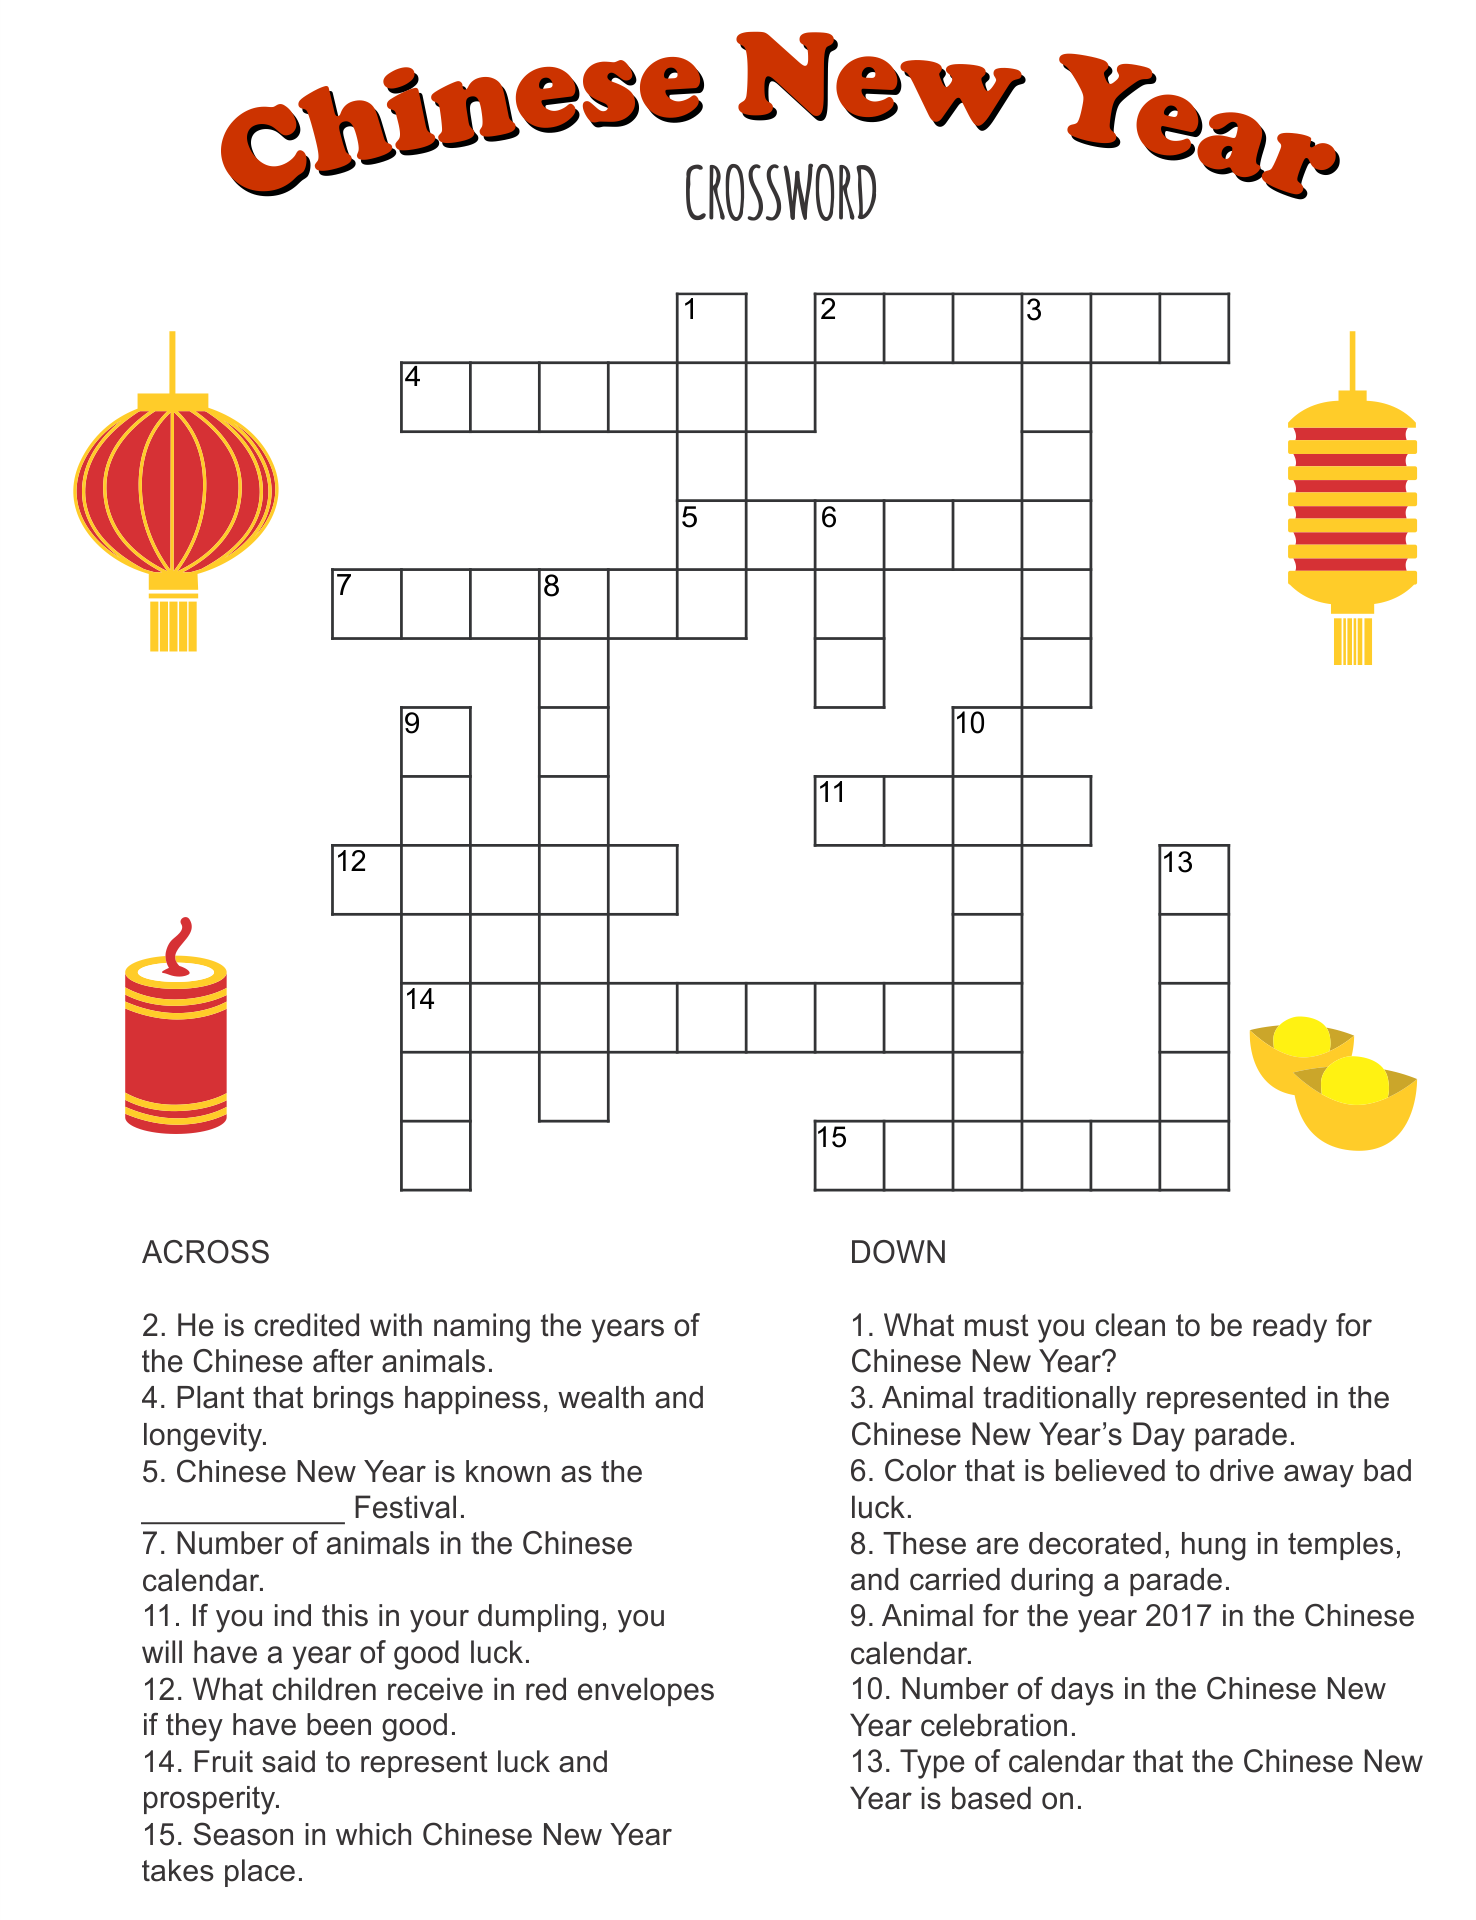 Fun Beginner Crossword Puzzles Printable For Little Kids